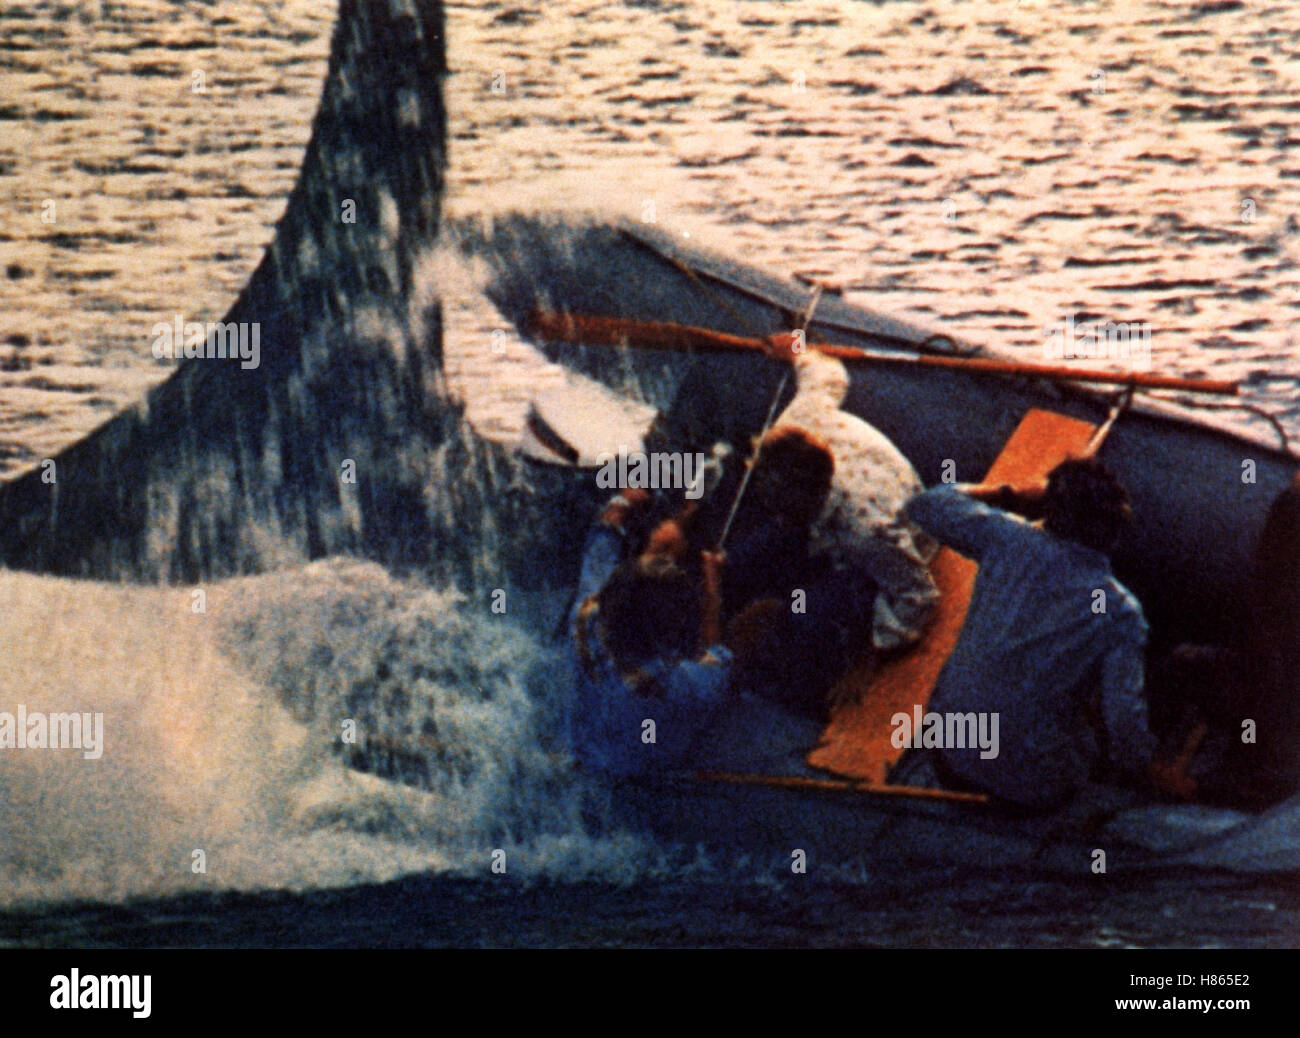 Mörderhaie greifen un, (SHARK'S TREASURE) USA 1974, Regie: Cornel Wilde, Szene: Haifisch attackiert Boot, Stichwort: Meer, Schlauchboot, Angriff, Hai Foto Stock